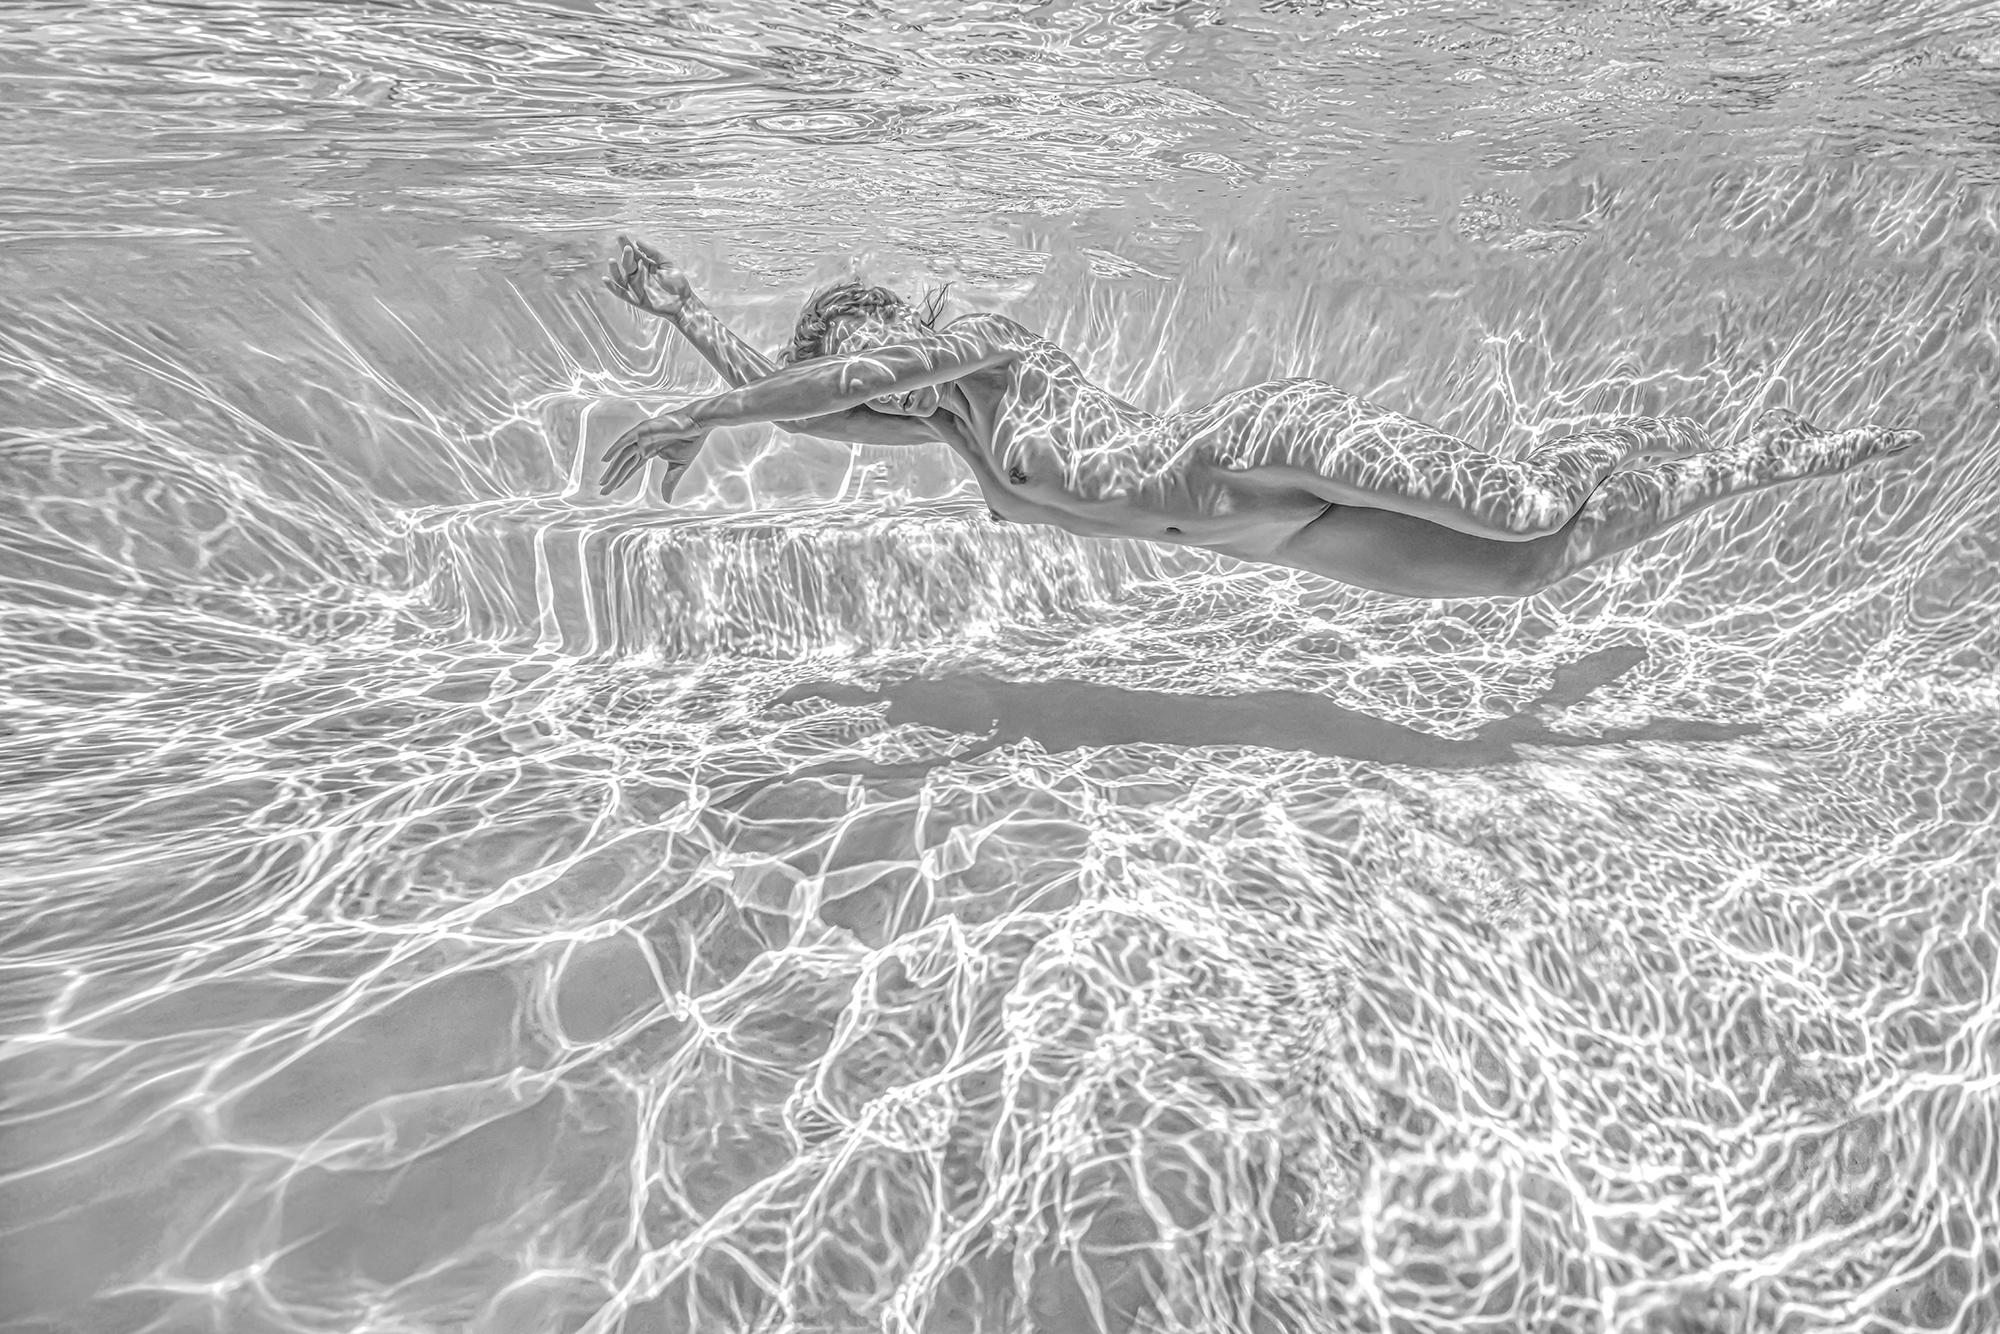 Alex Sher Black and White Photograph - Thunderweb - underwater black & white nude photograph - print on aluminum 24x36"